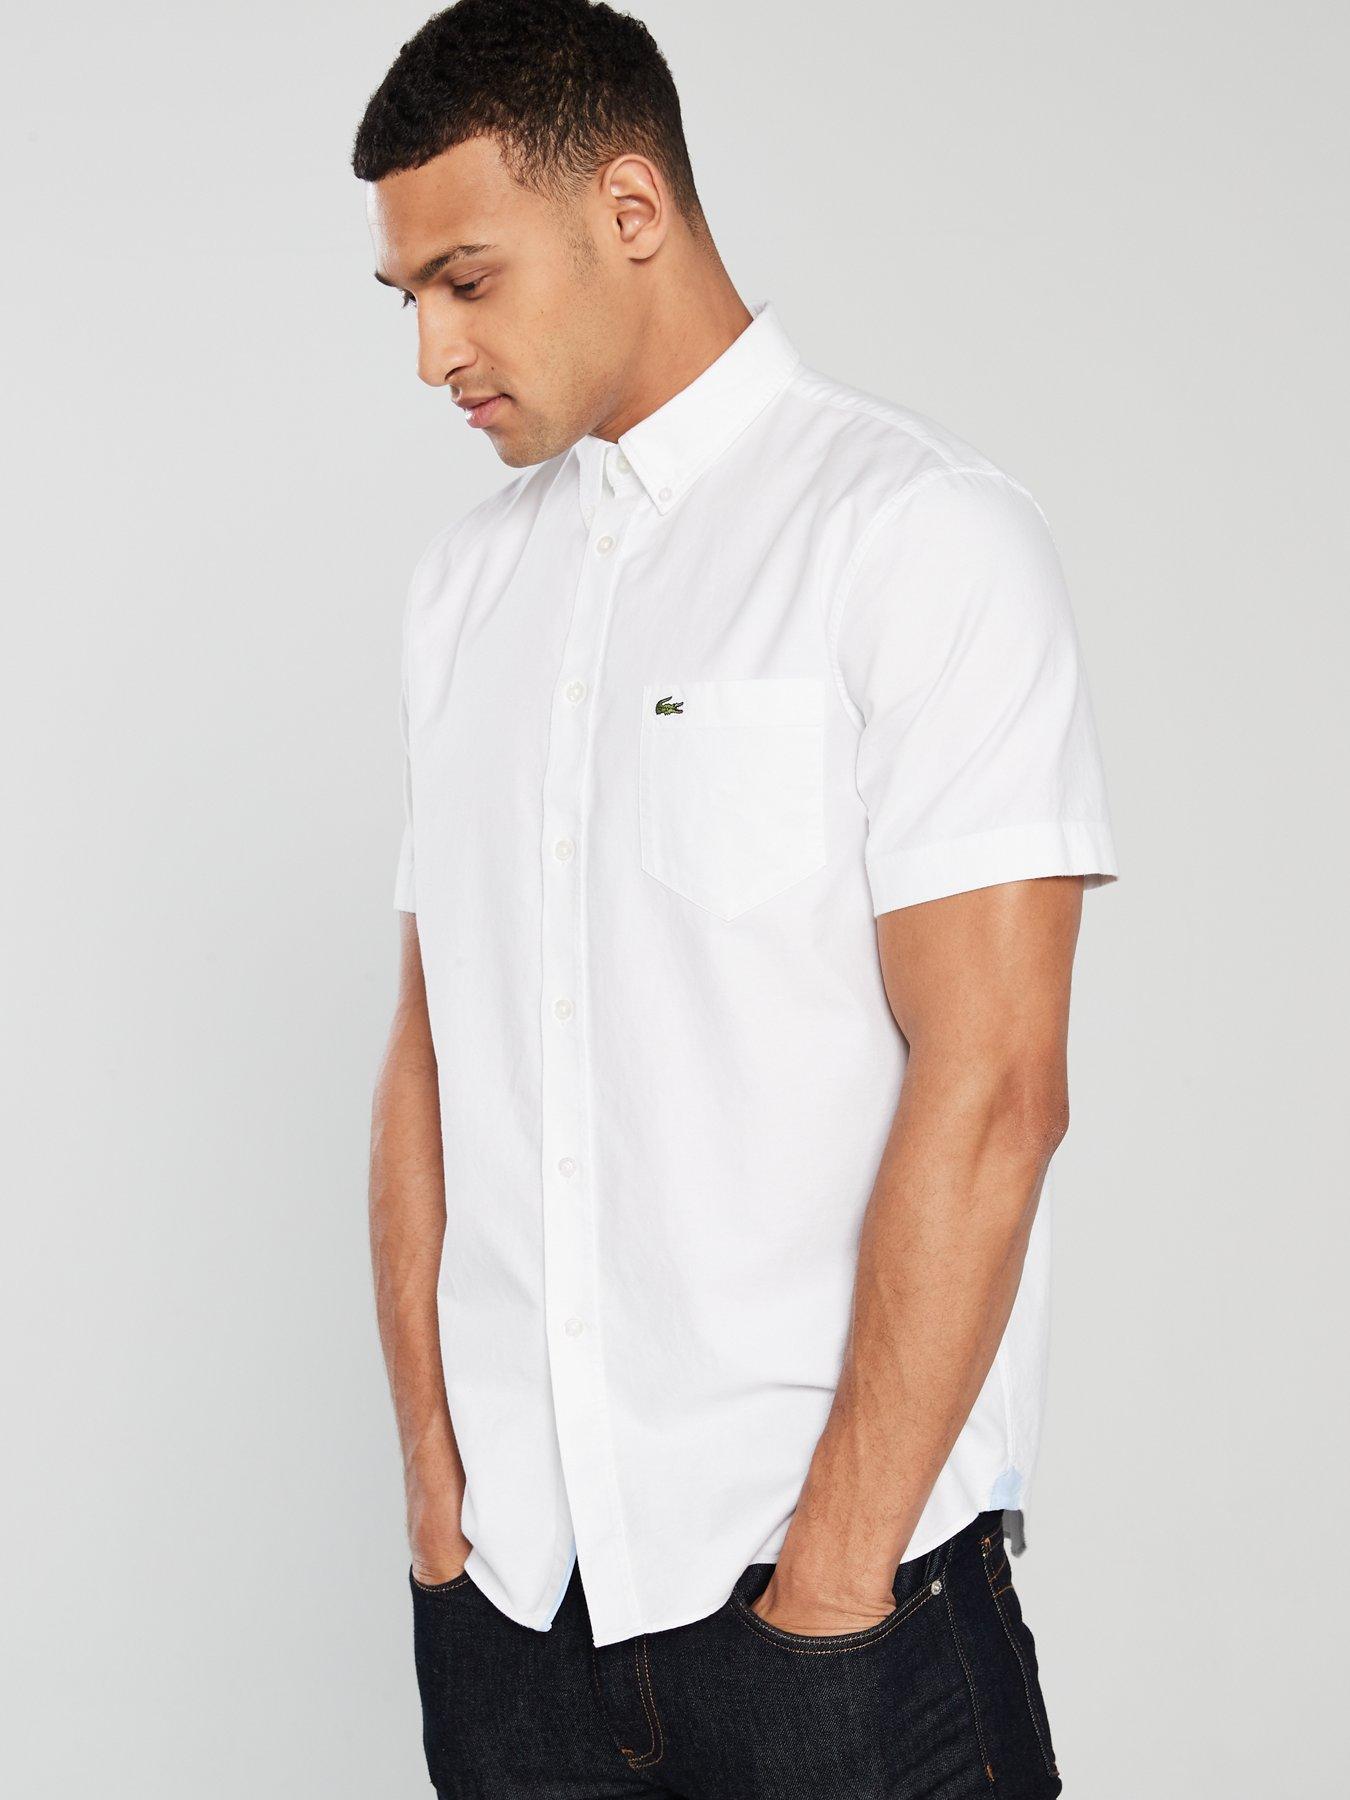 lacoste white short sleeve shirt